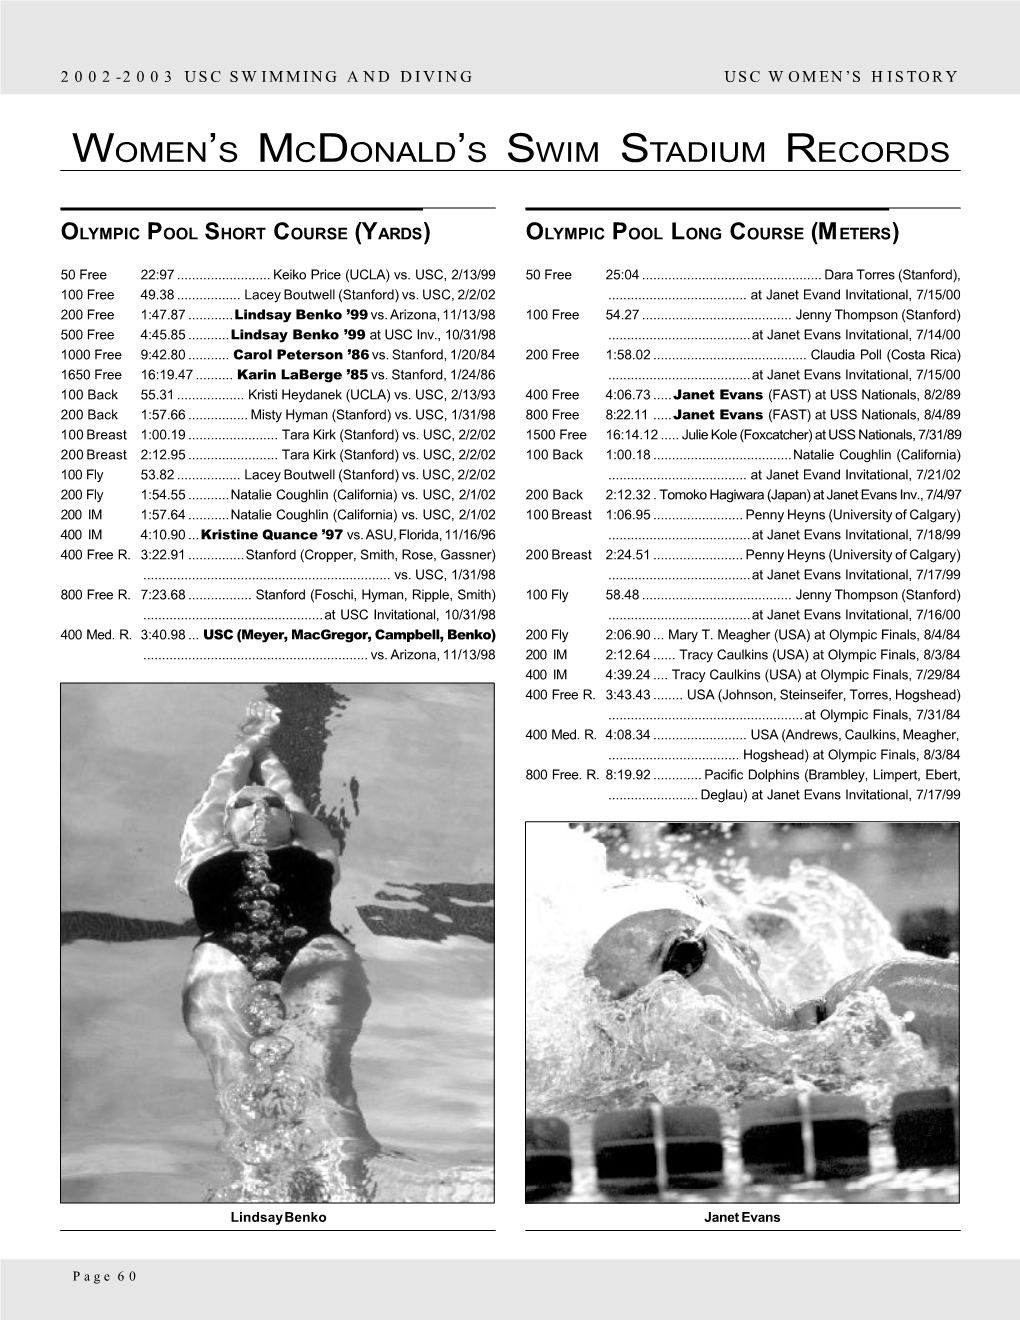 Women's Mcdonald's Swim Stadium Records